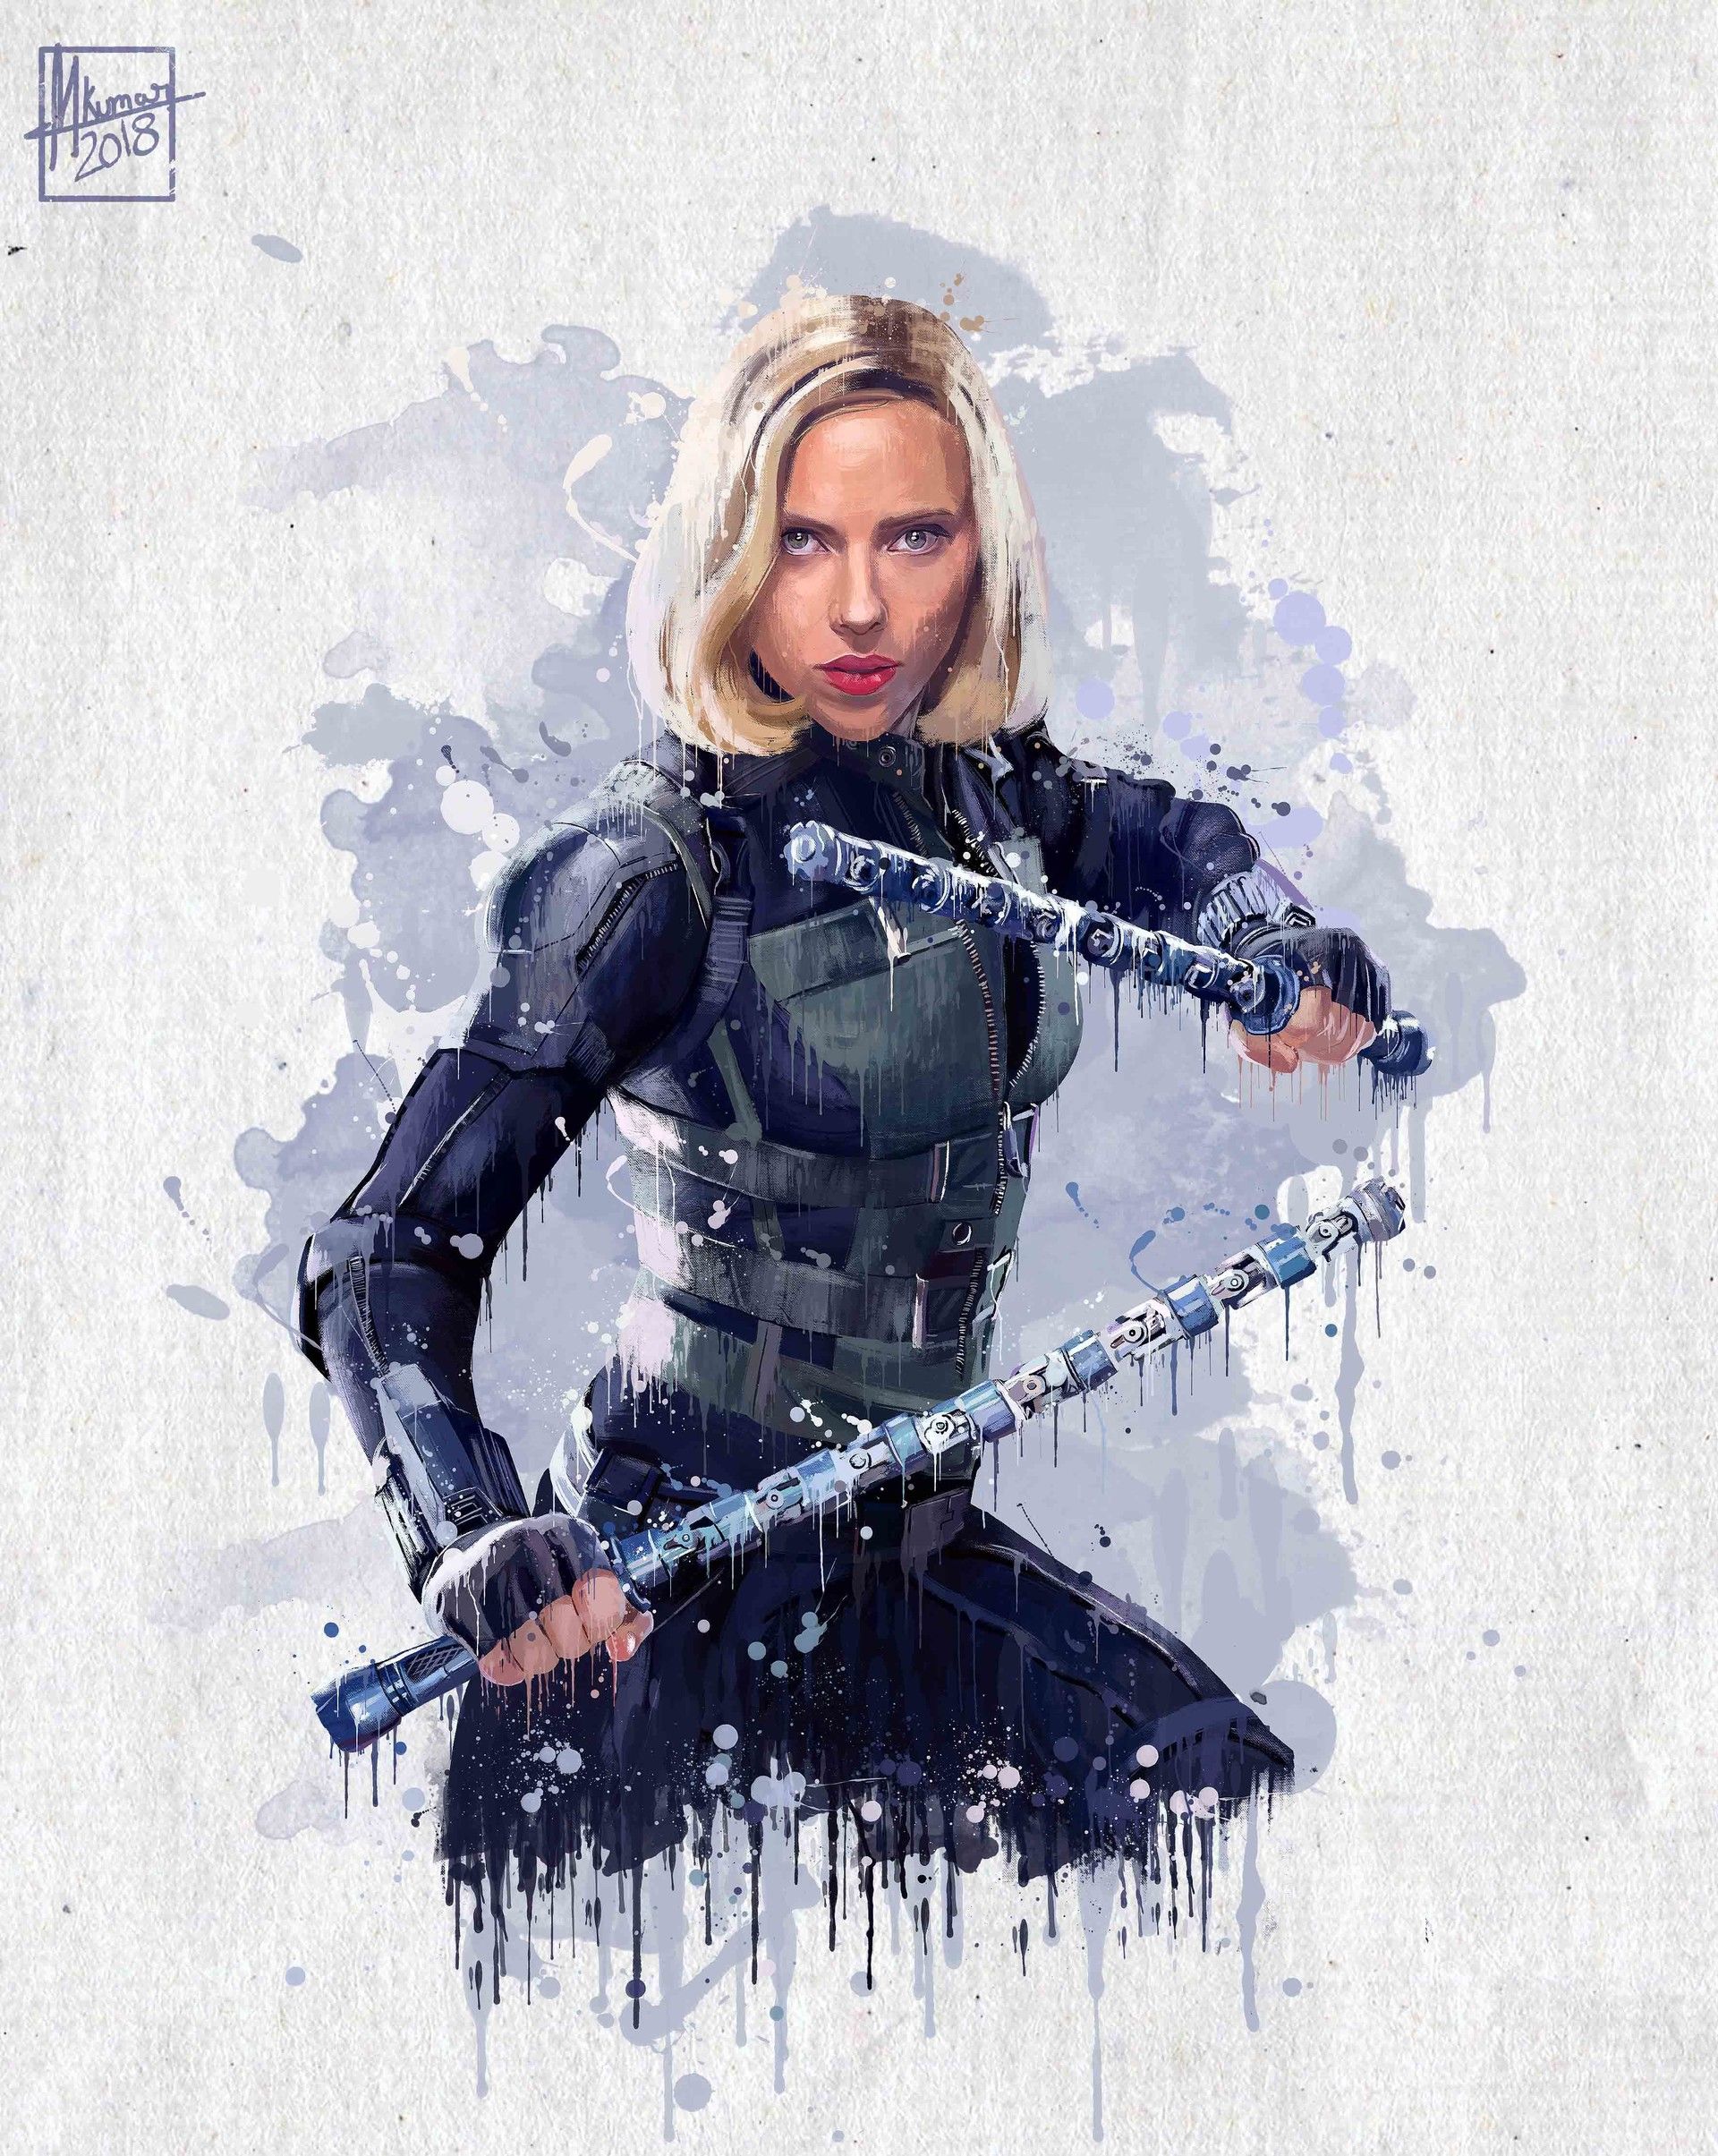 The Marvel Avengers Infinity War Black Widow Art Poster.jpg